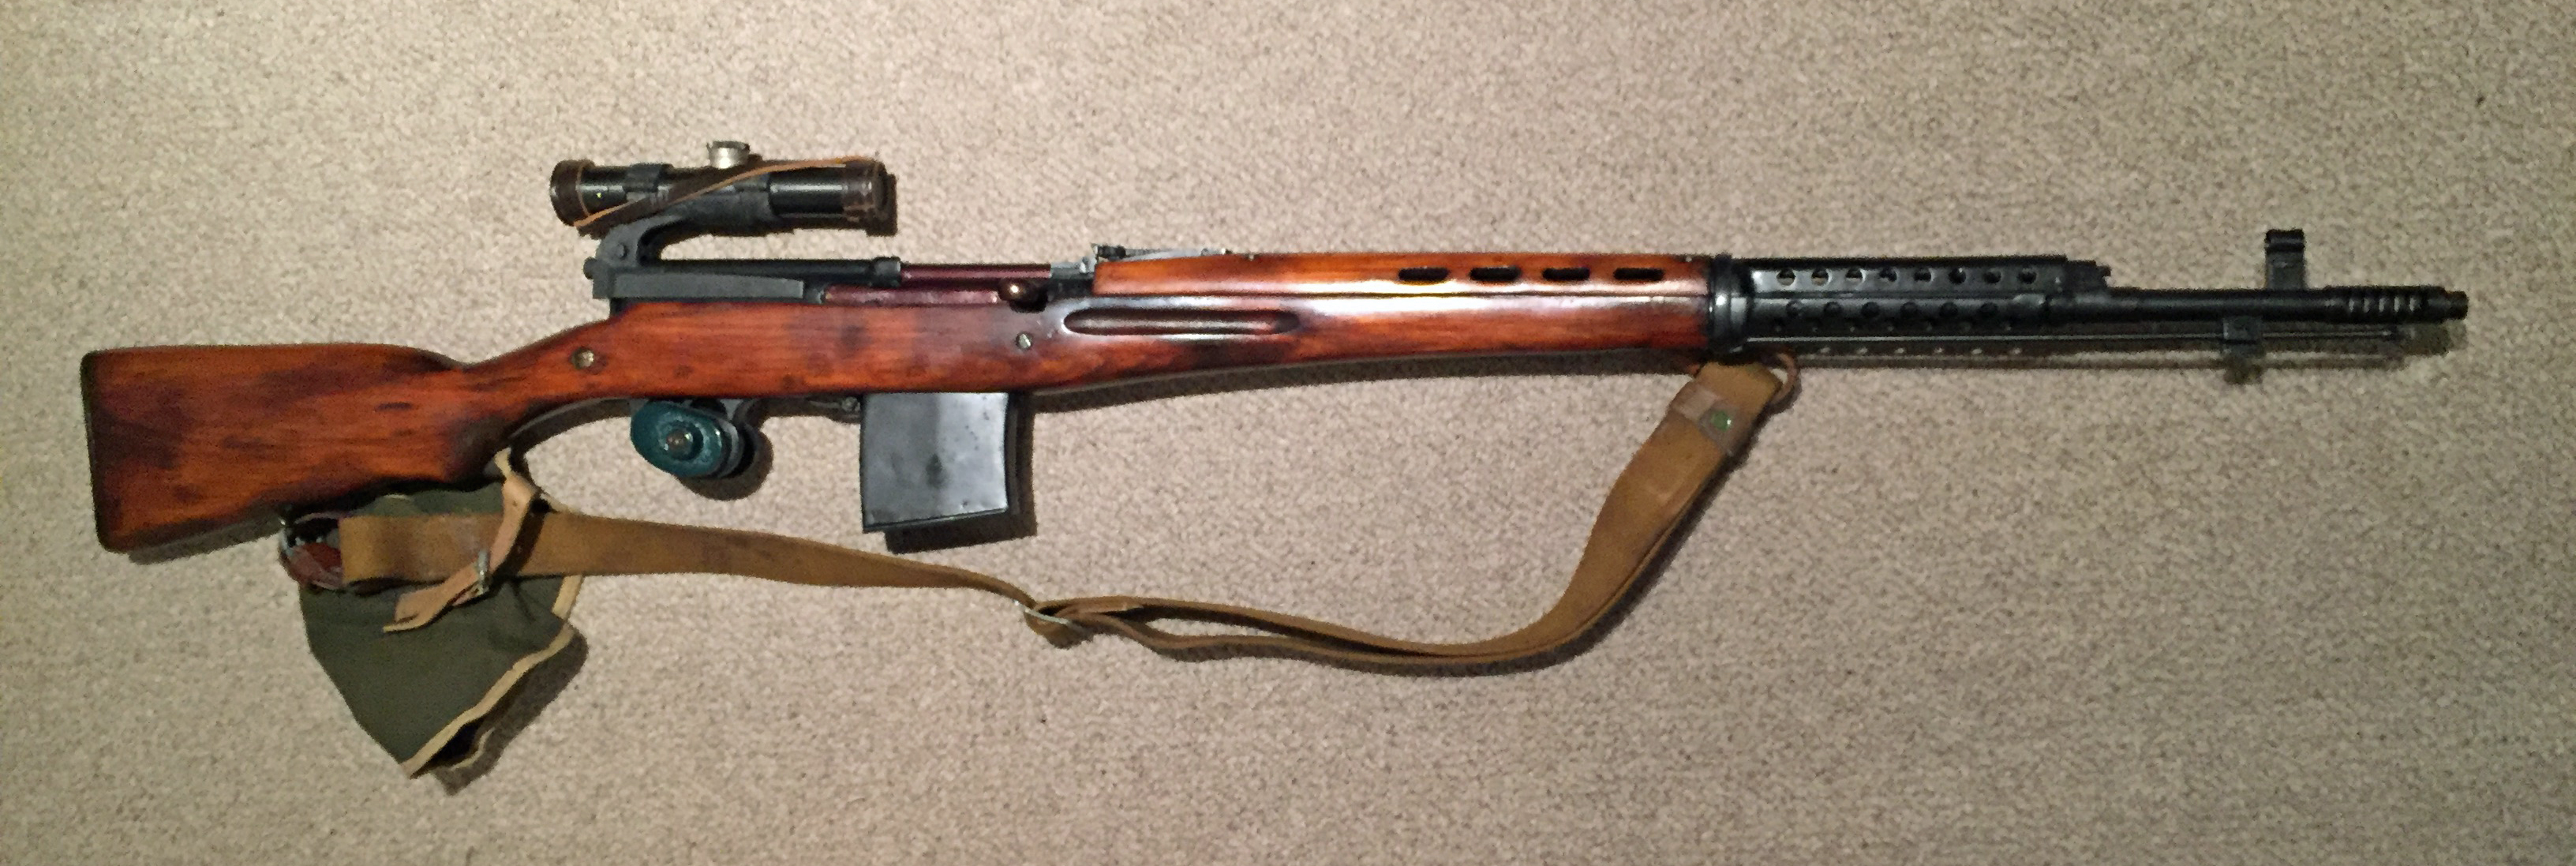 SVT-40 sniper 1941 Tula.